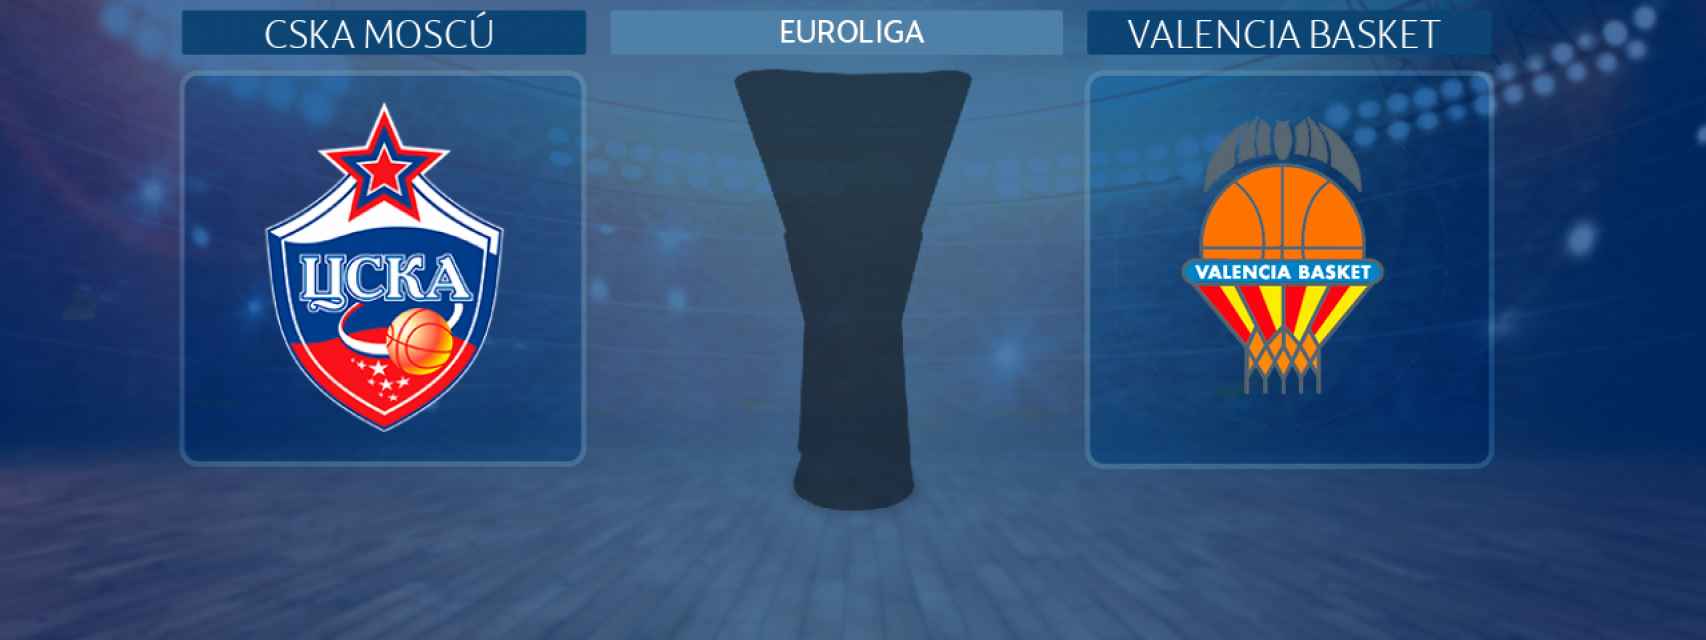 CSKA Moscú - Valencia Basket, partido de la Euroliga